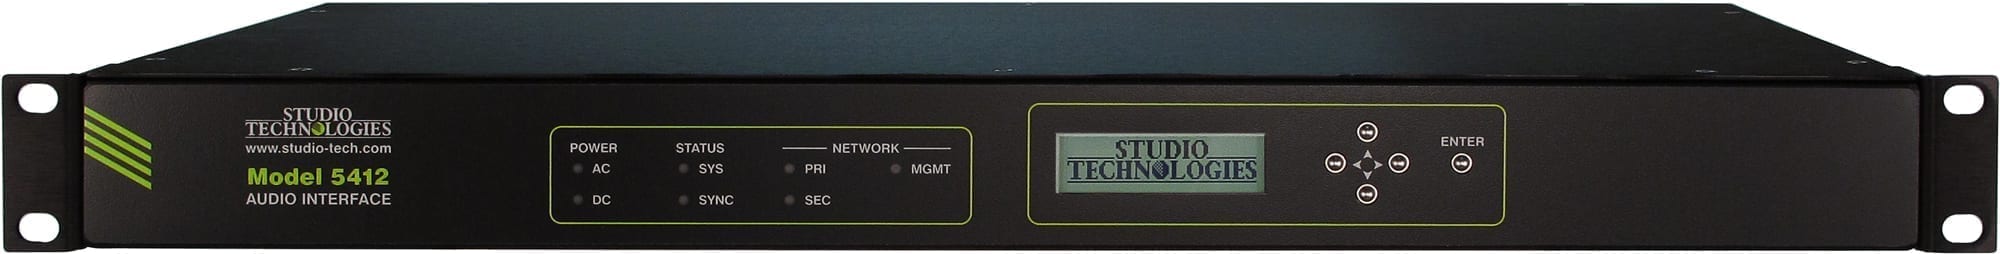 studio-technologies-m5412